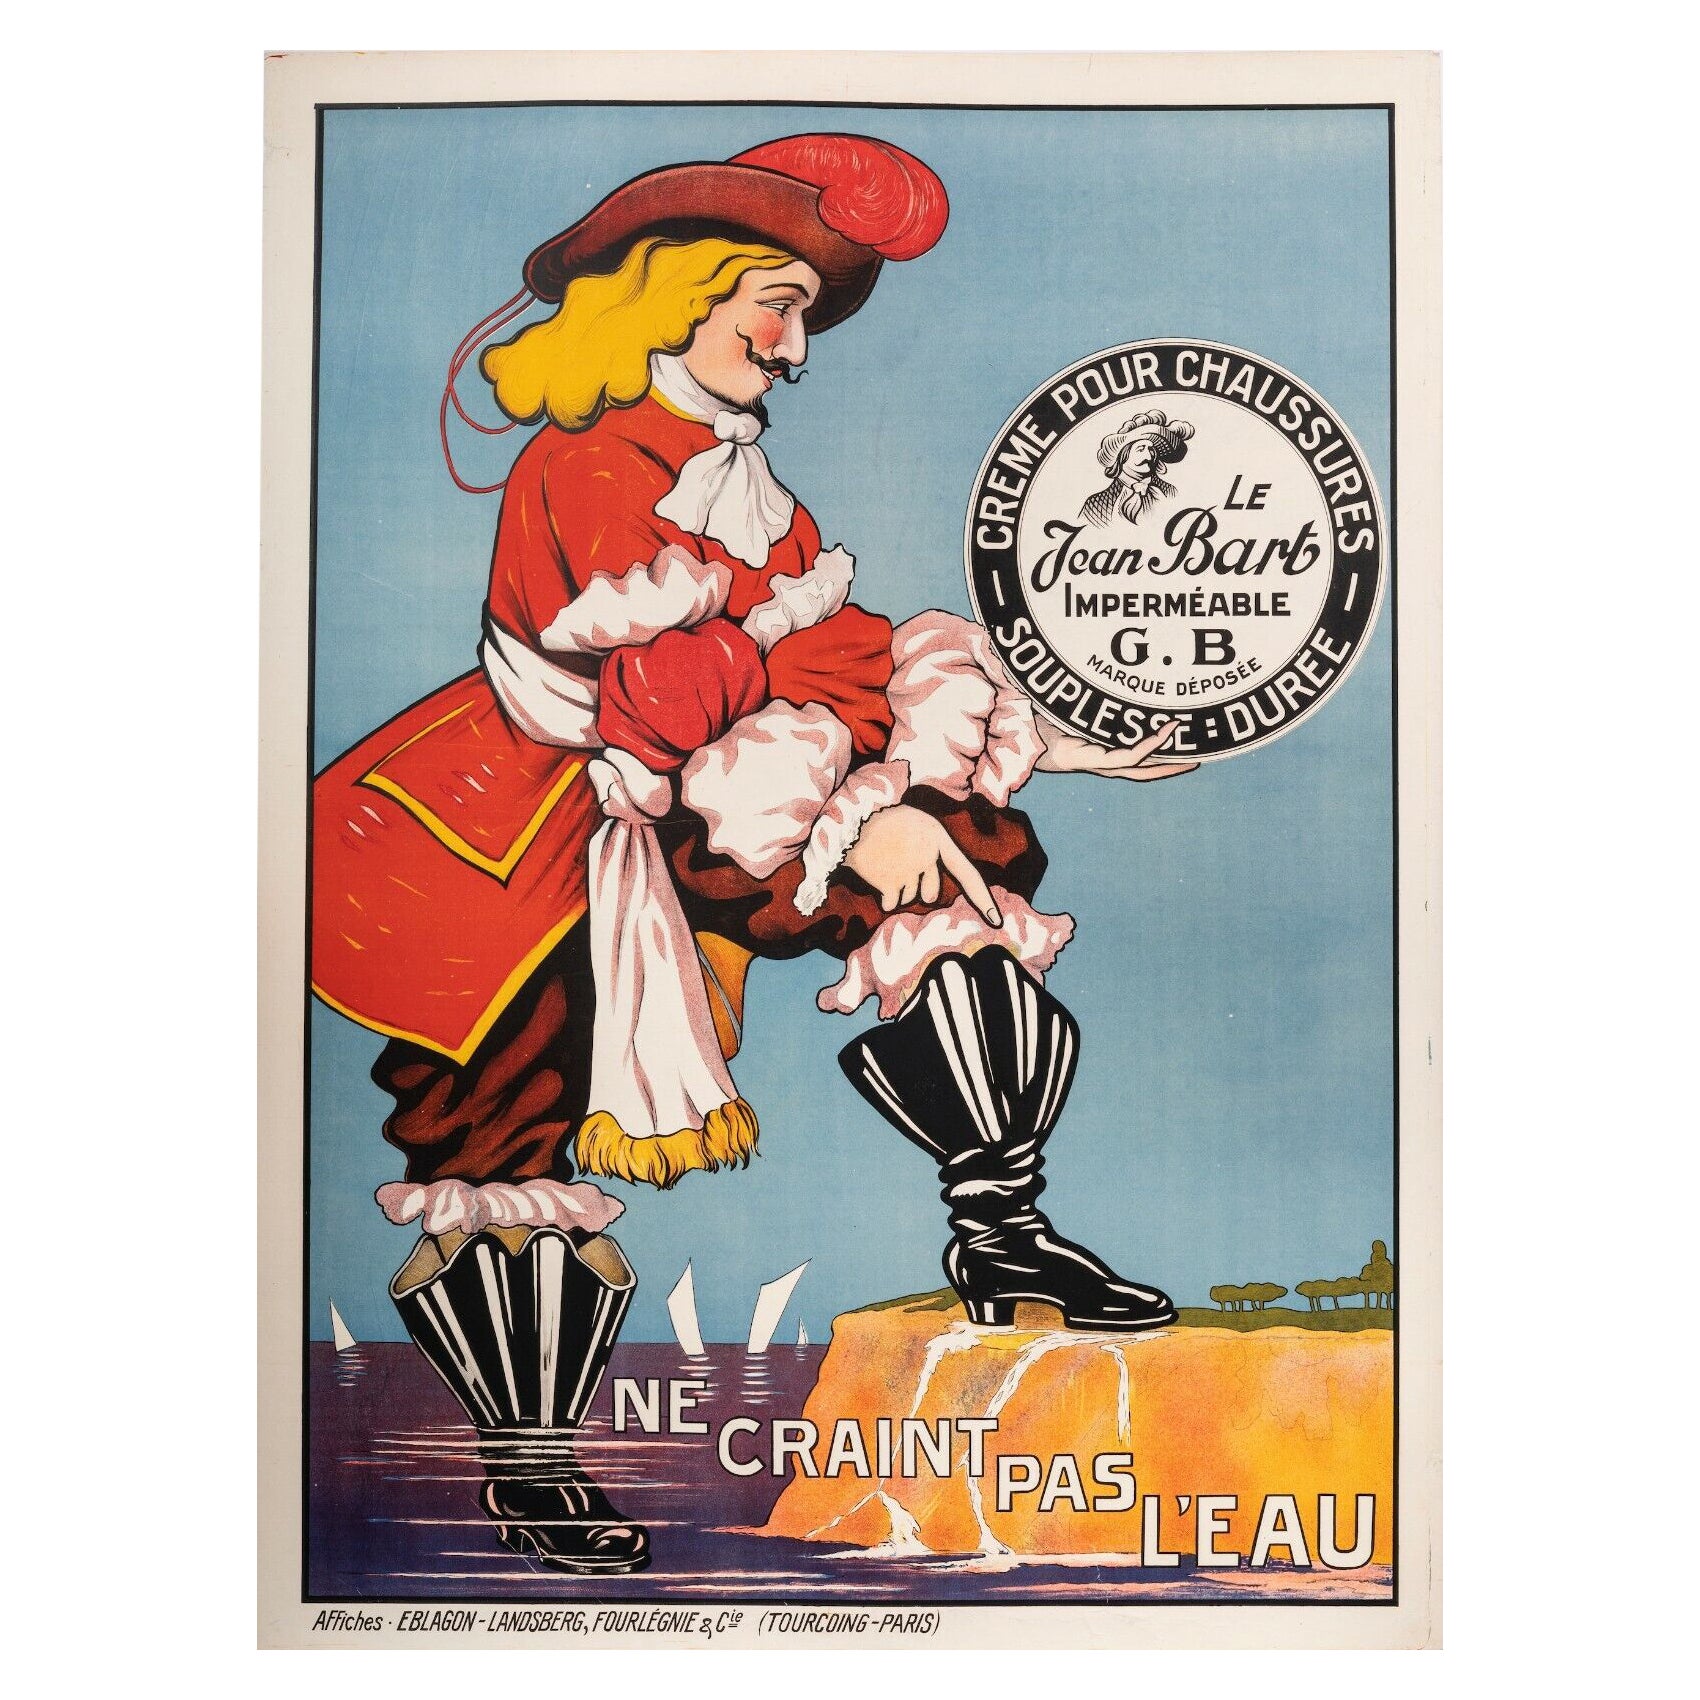 Original Vintage Poster-Jean Bart Shoe Polish-Corsair-Pirate-Boot, c. 1930 For Sale